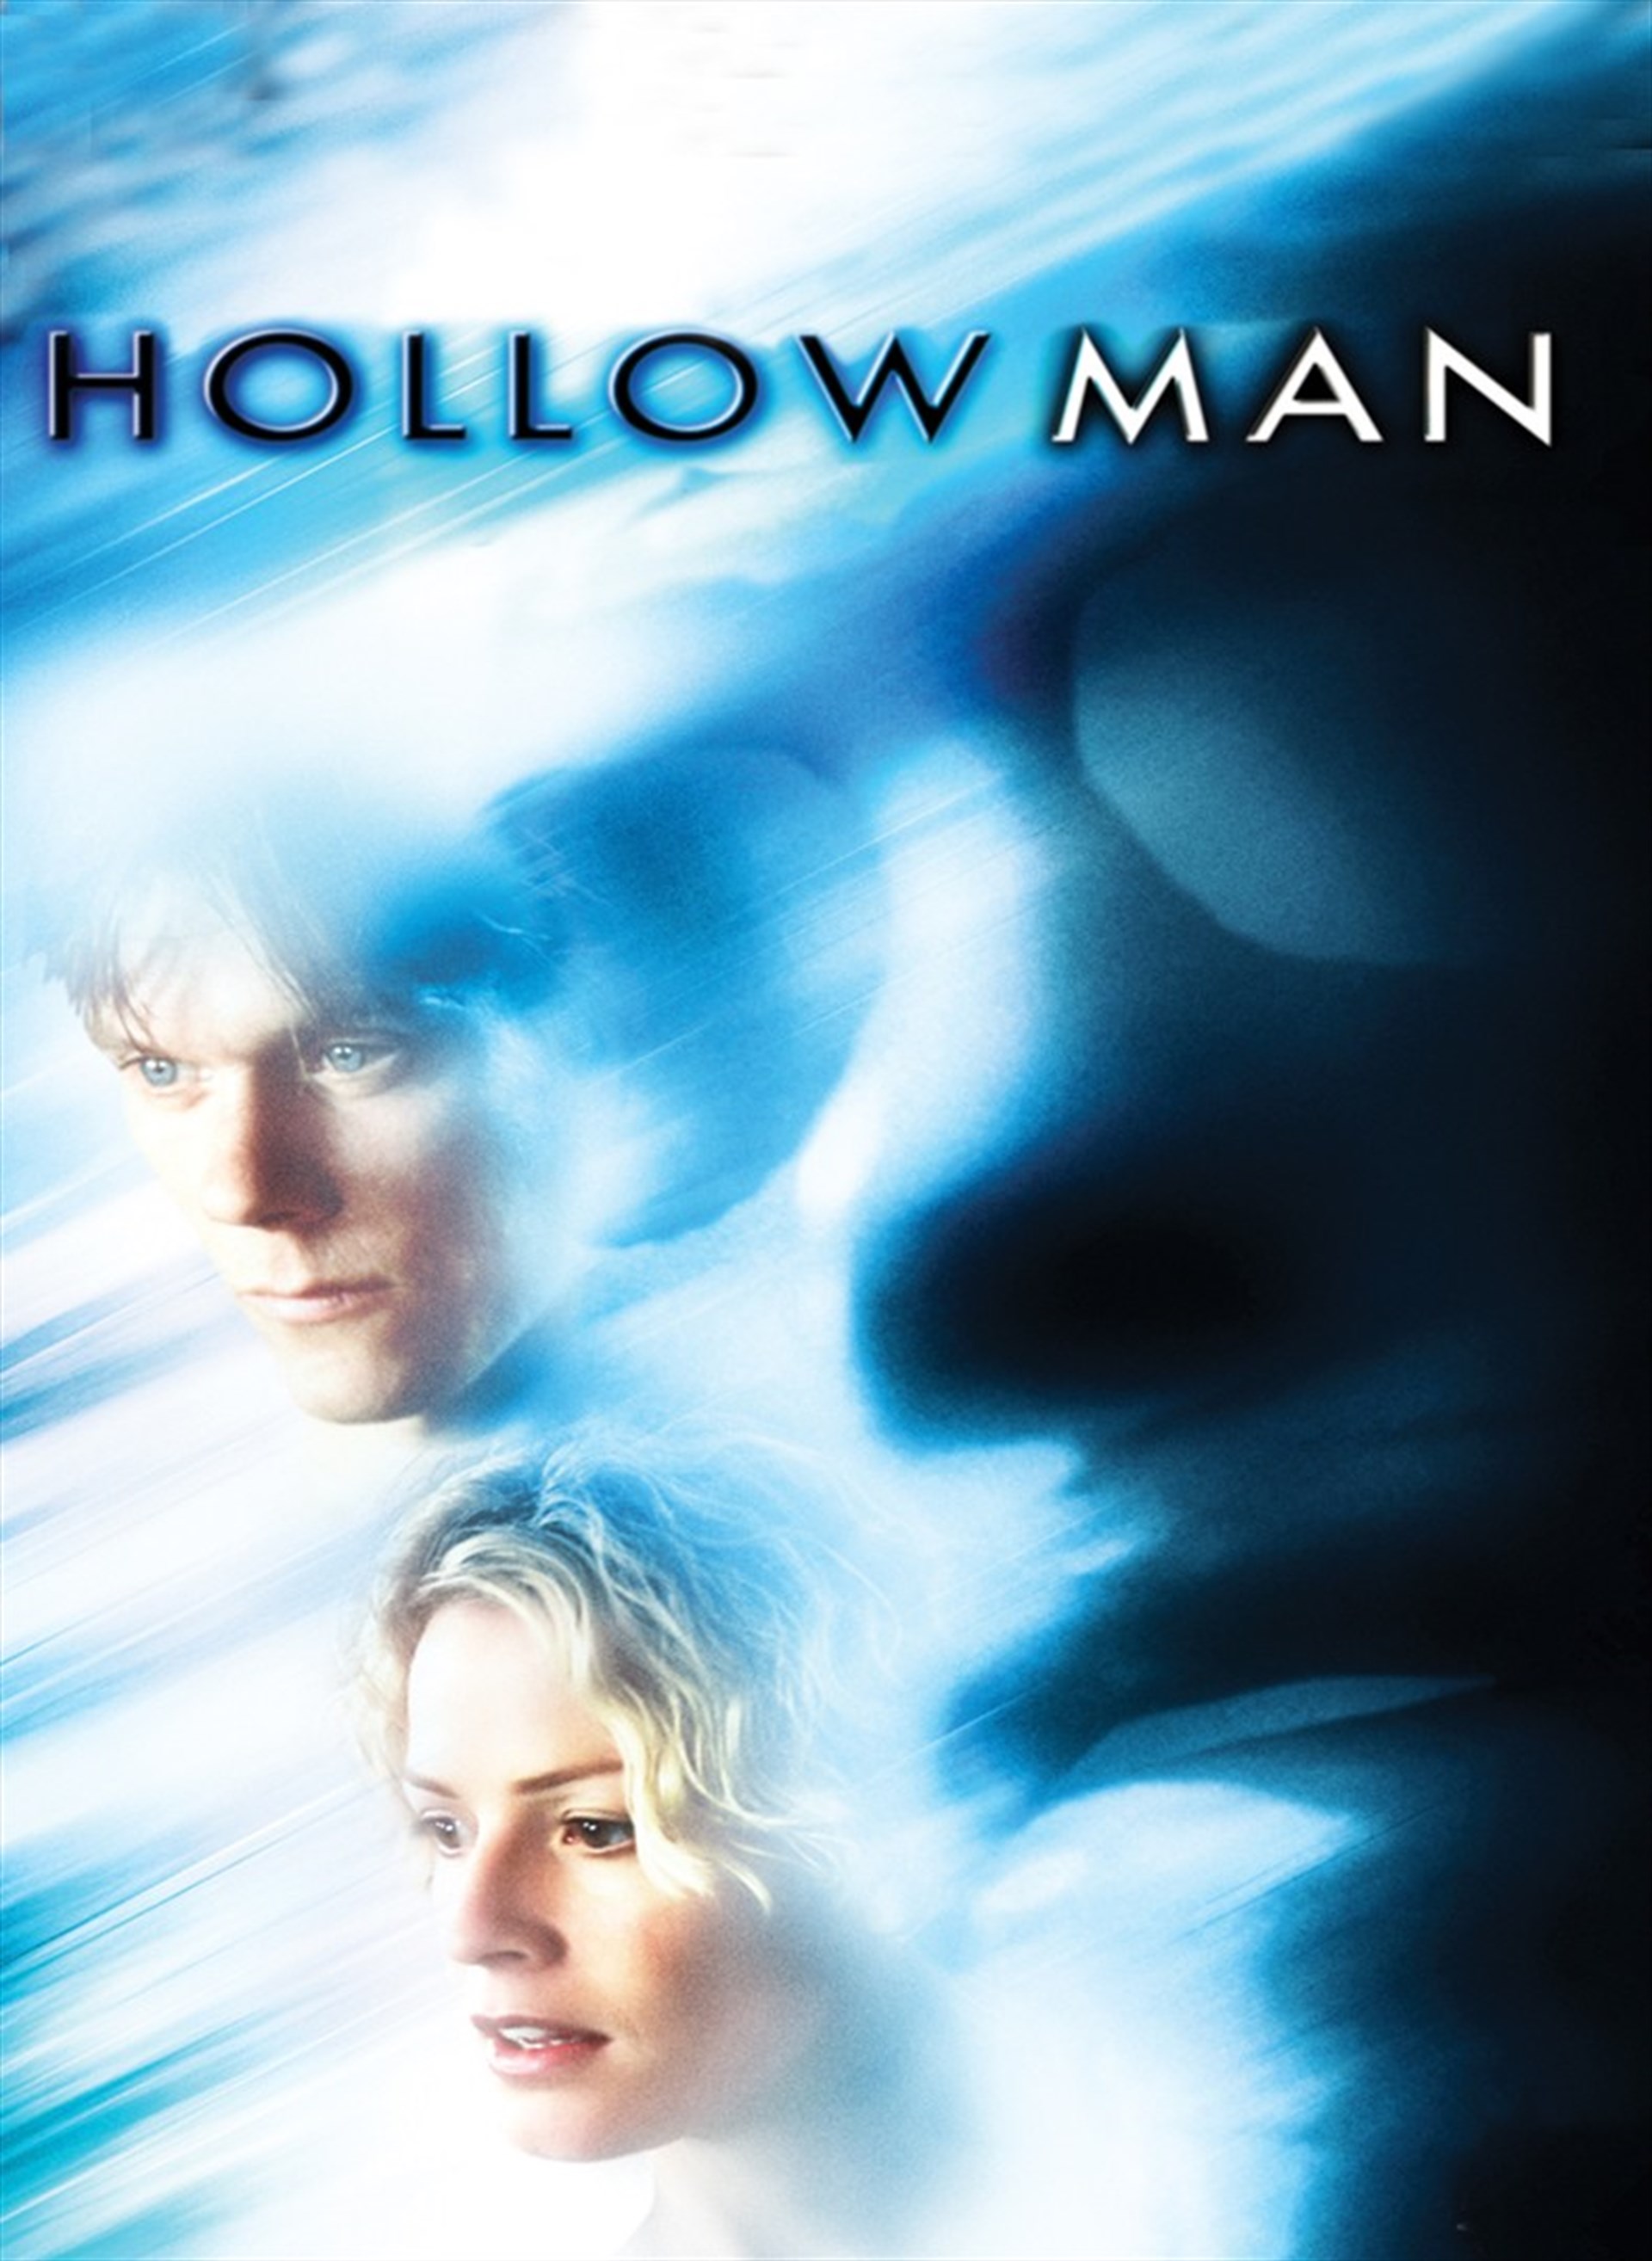 abha shrivastava recommends hollow man movie online pic